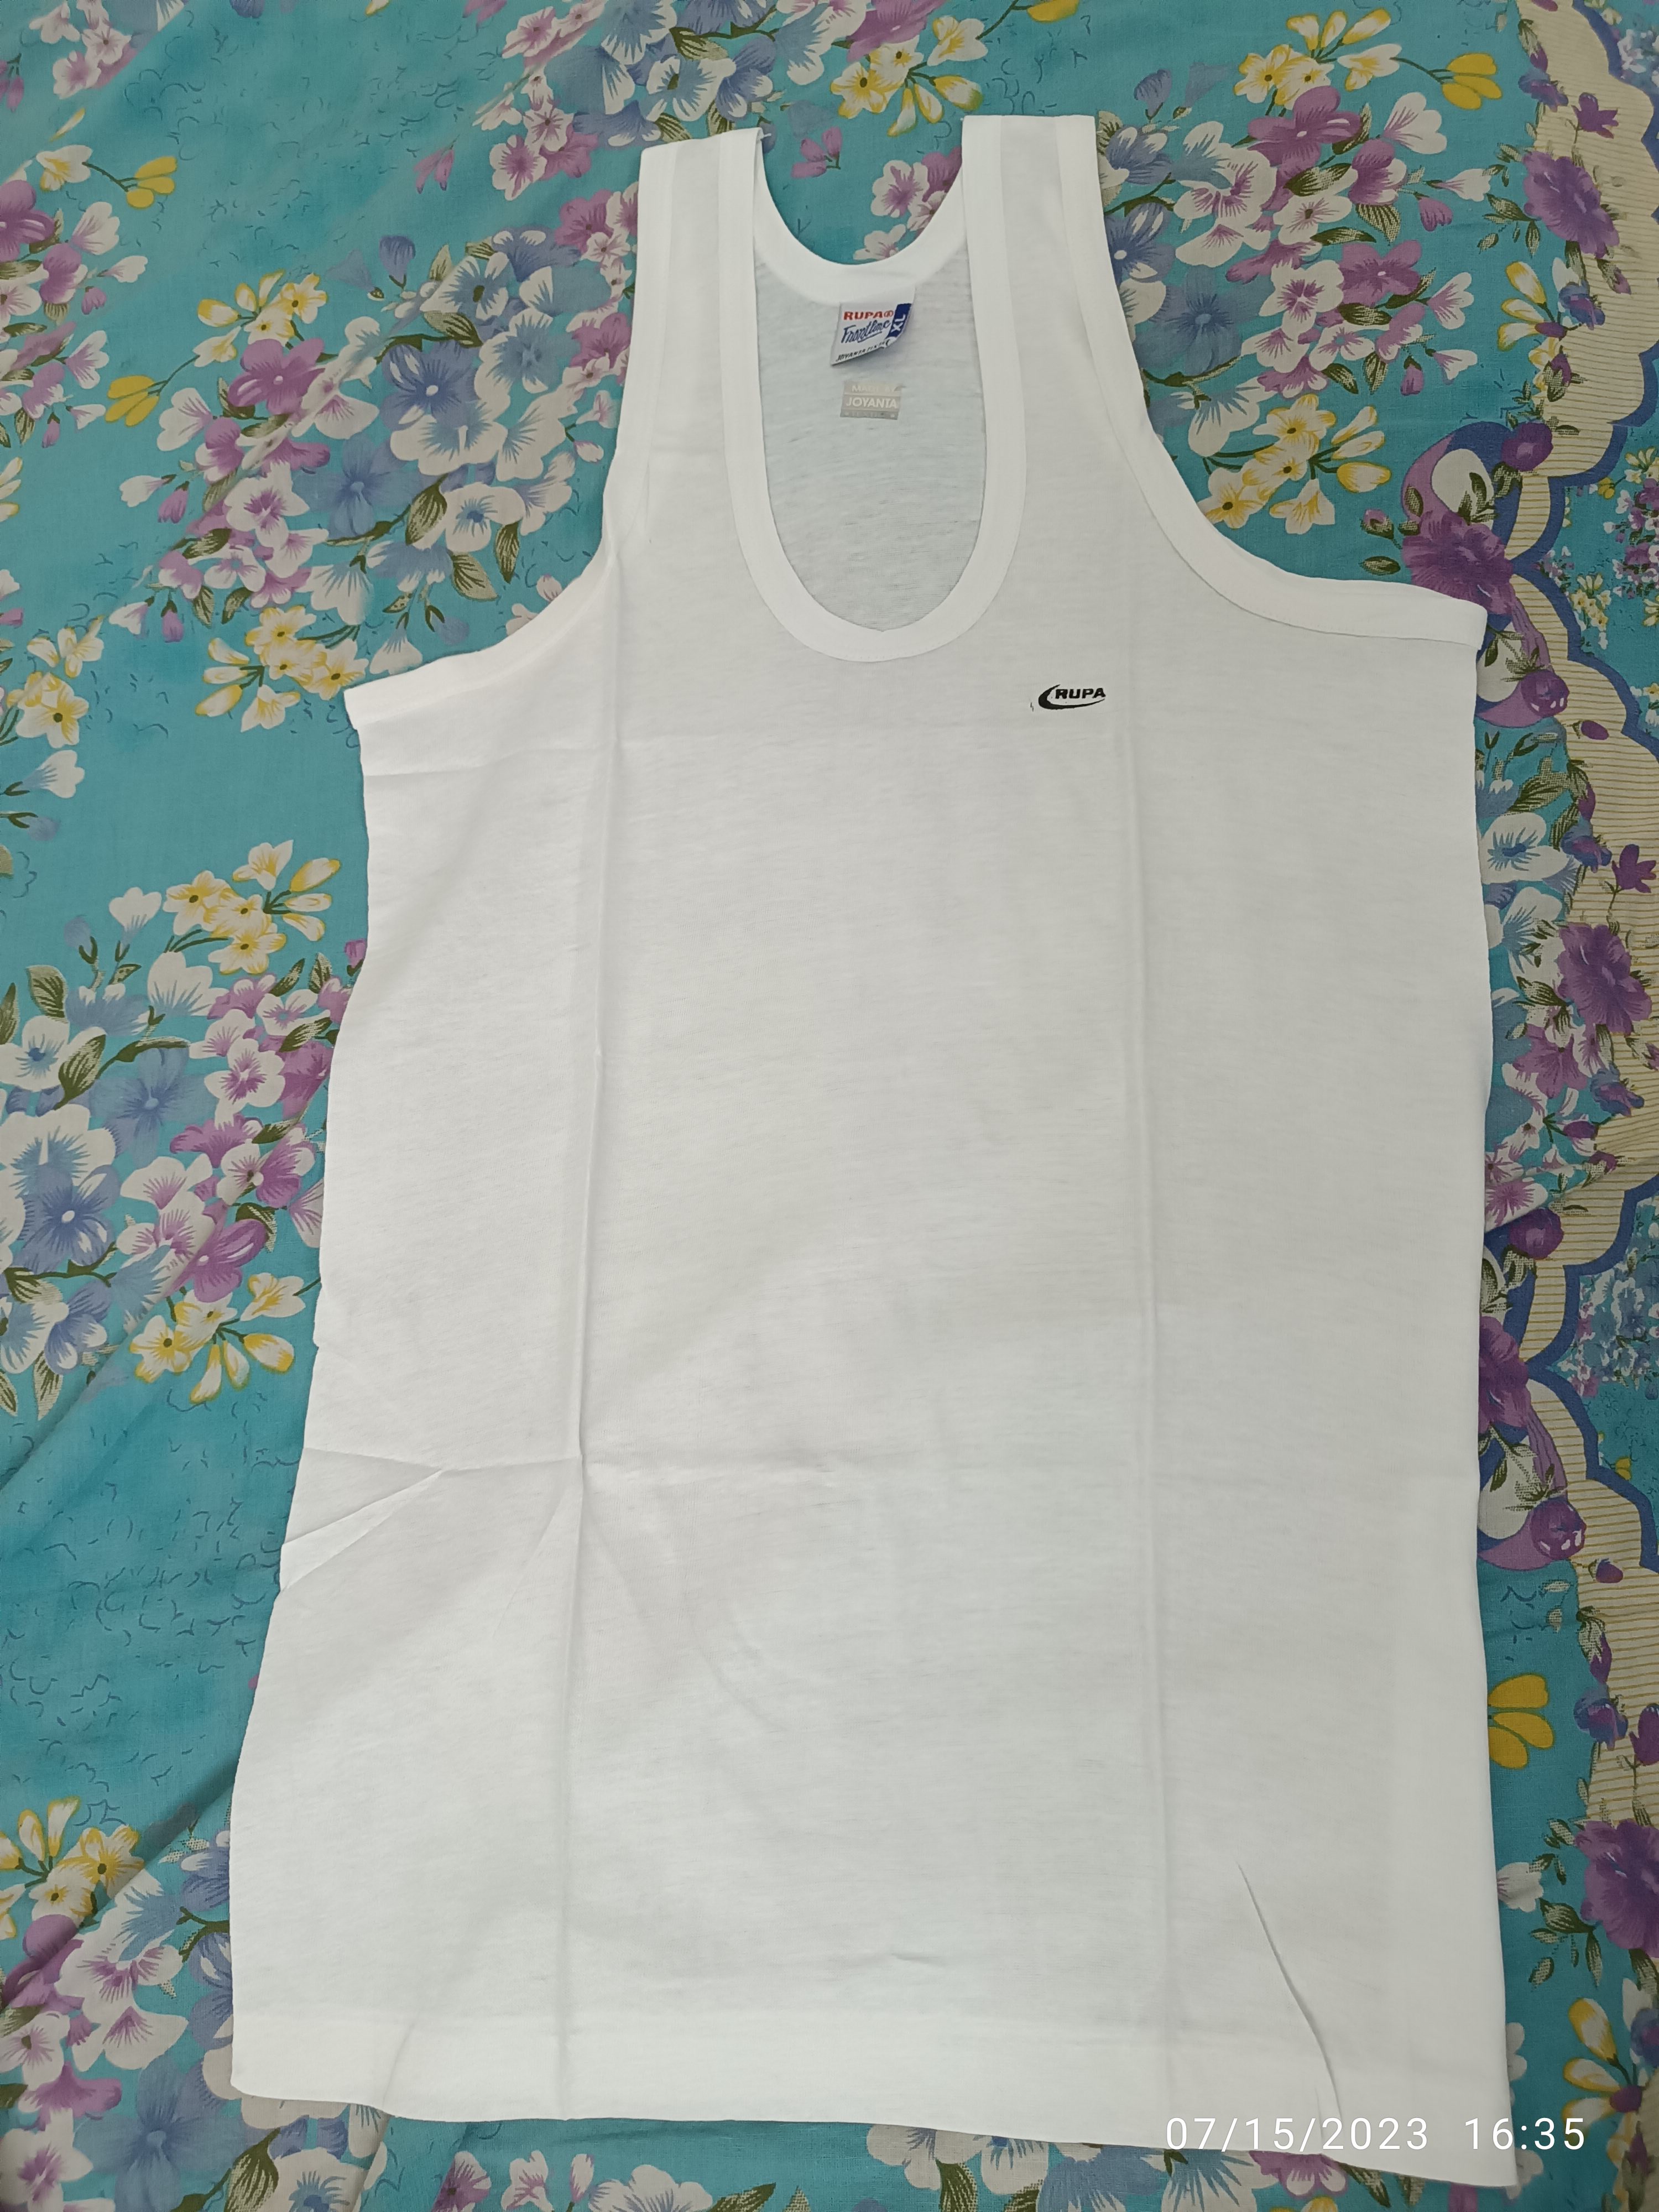 Rupa Euro Vest ( রুপা স্যান্ডোস গেঞ্জি )–Standard Quality-100% Cotton  Sandos Ganji 100% Cotoon